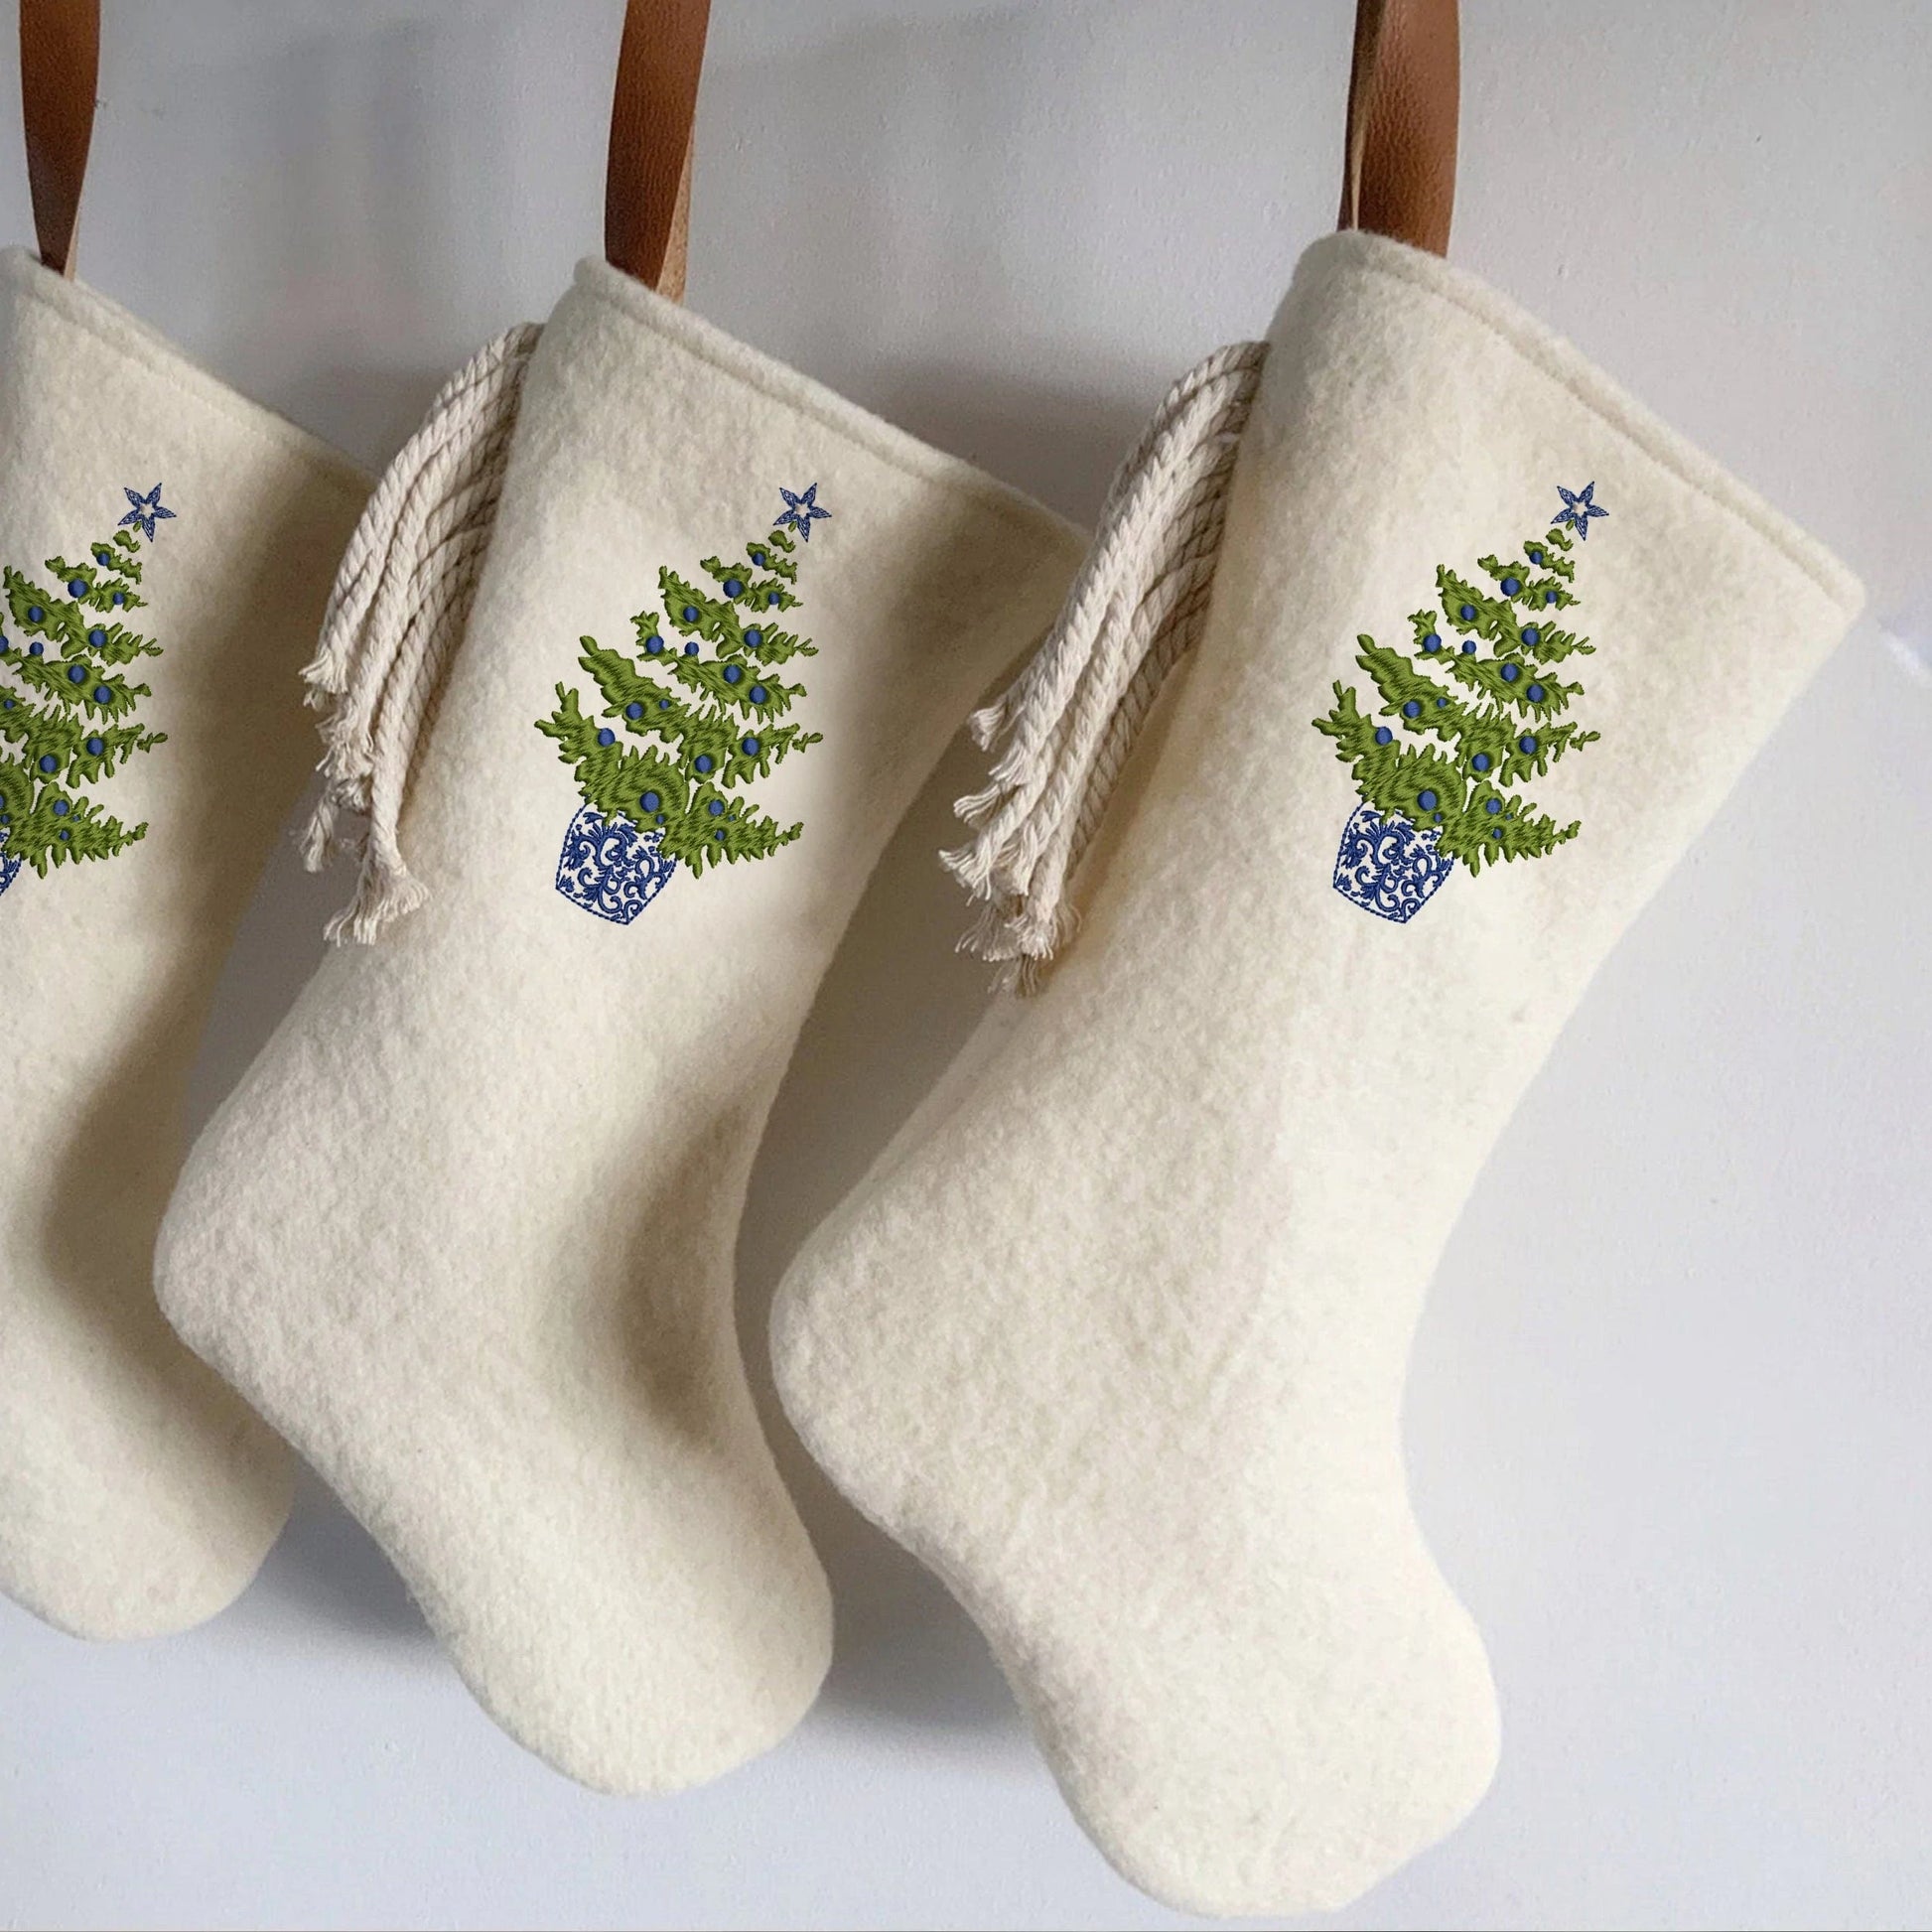 Scandinavian Tree Machine Embroidery Design on Christmas stockings